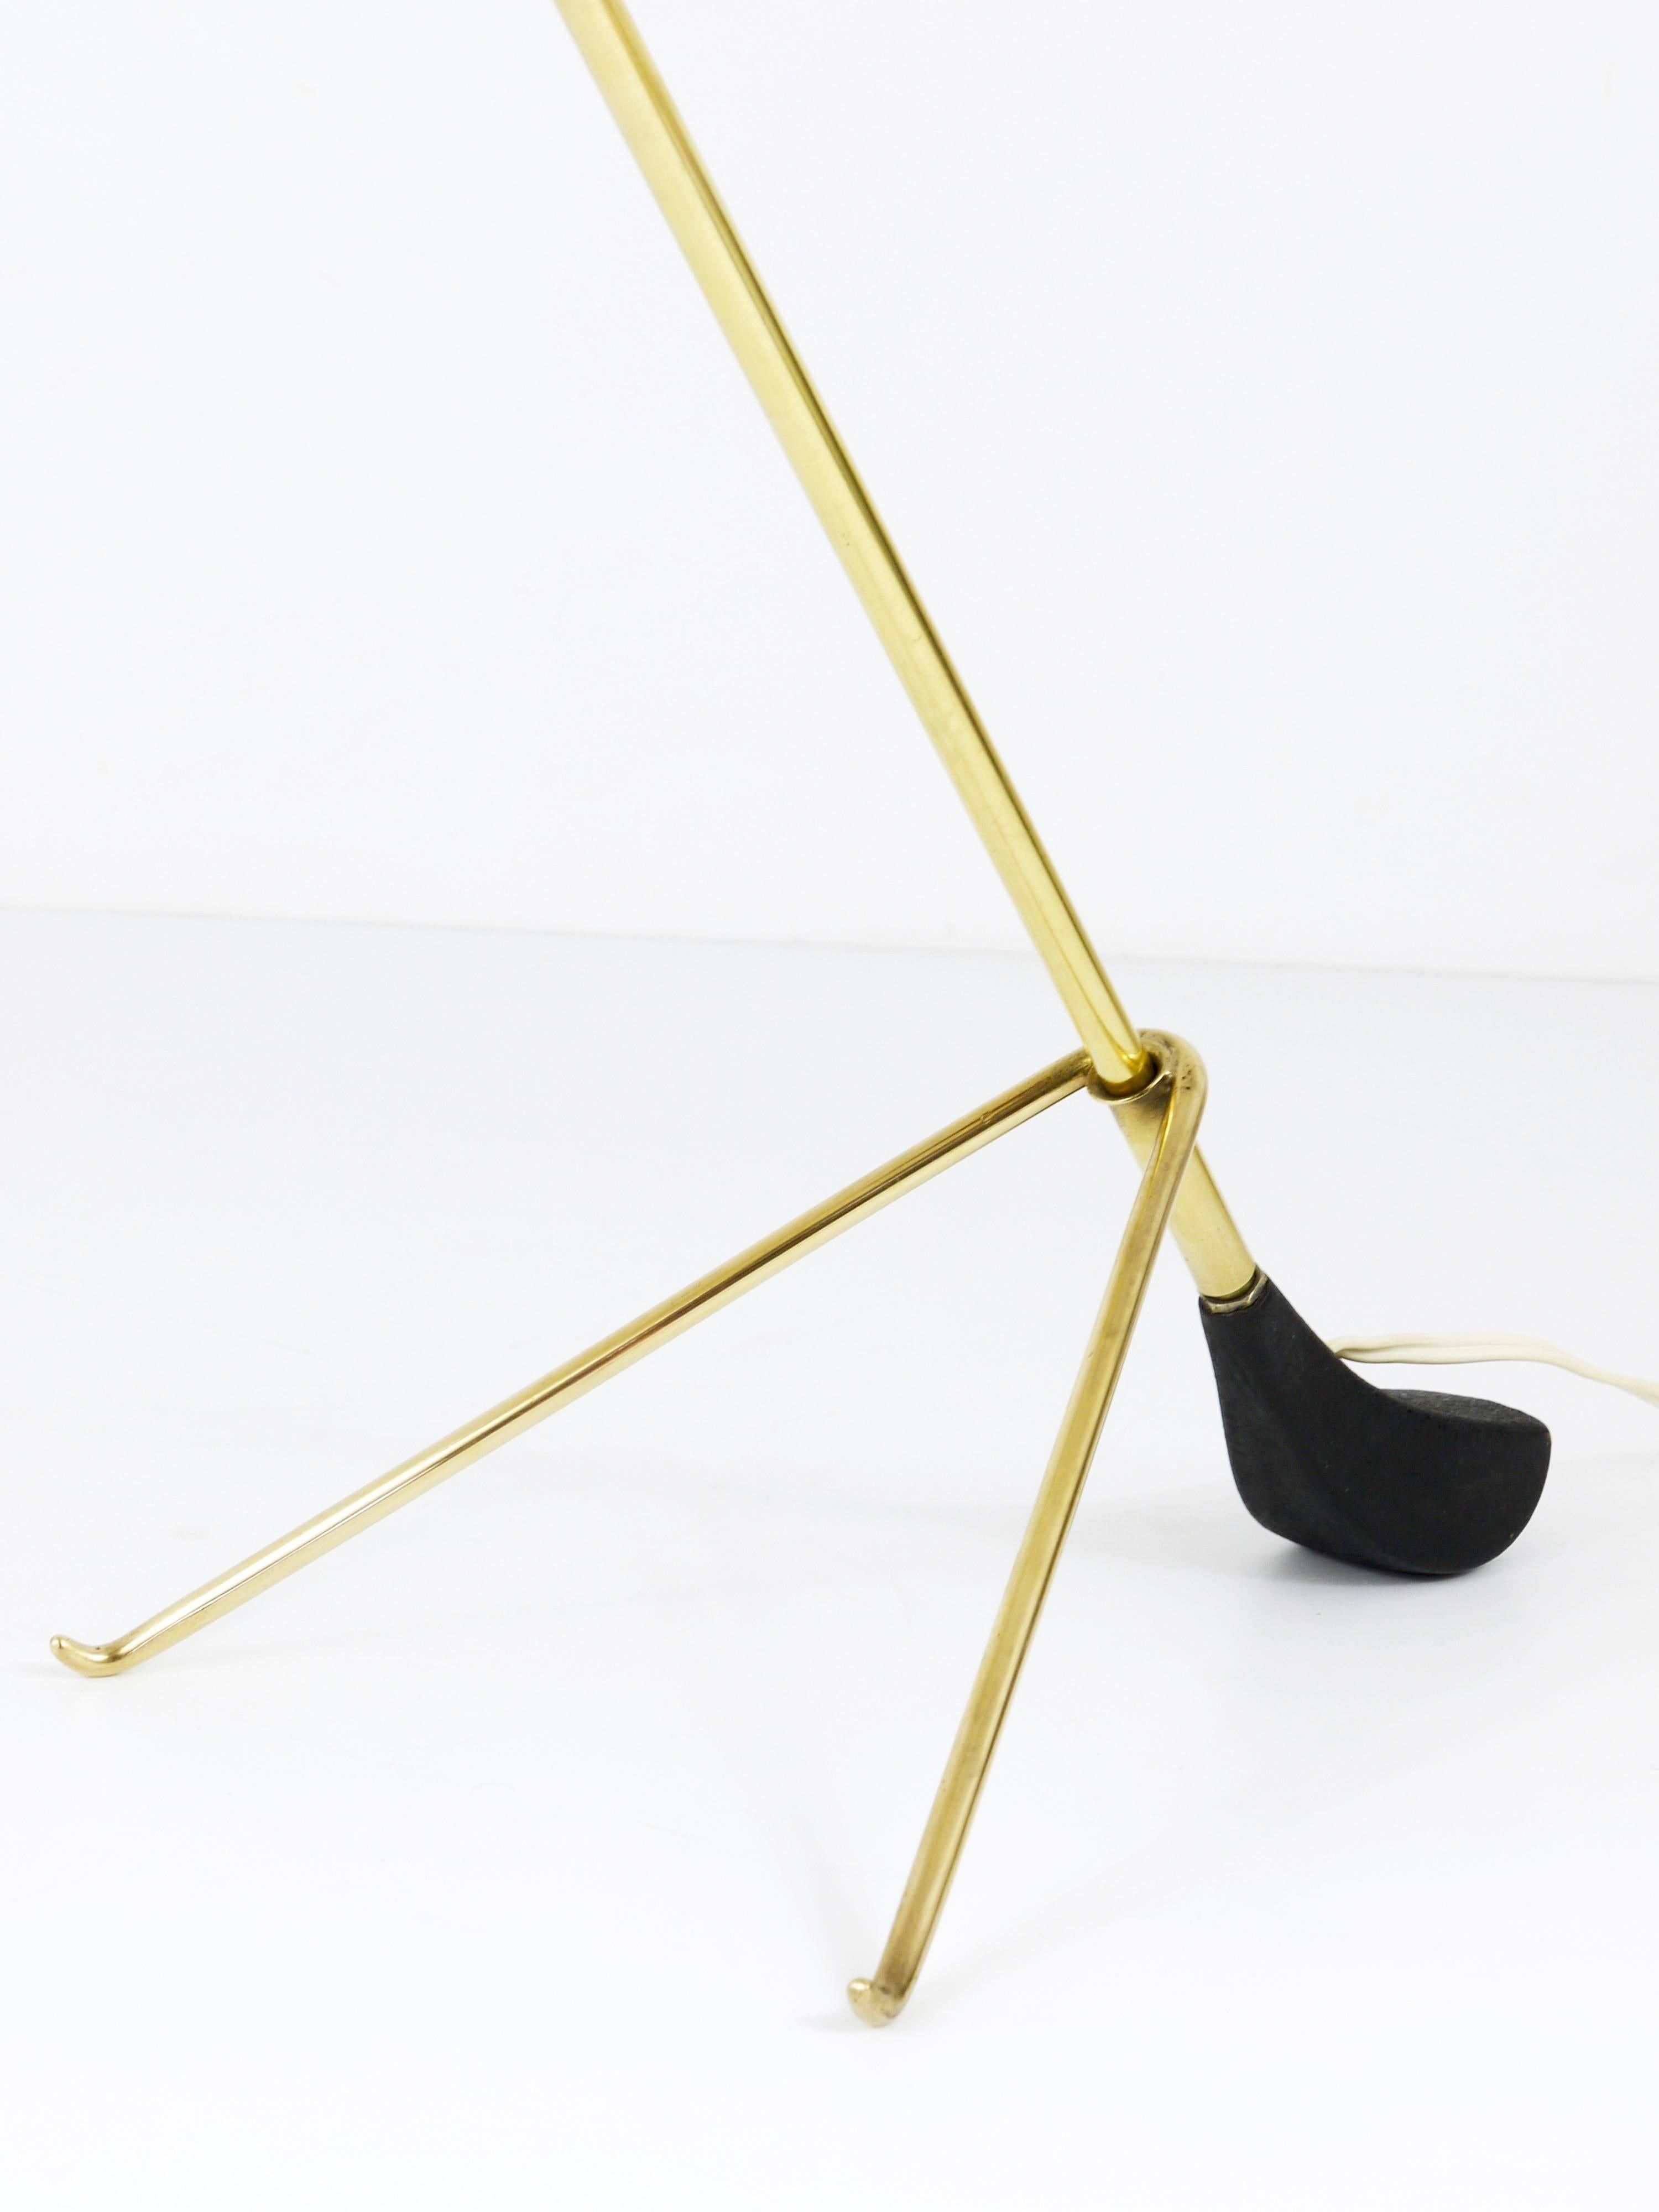 A beautiful modernist brass table lamp, model 